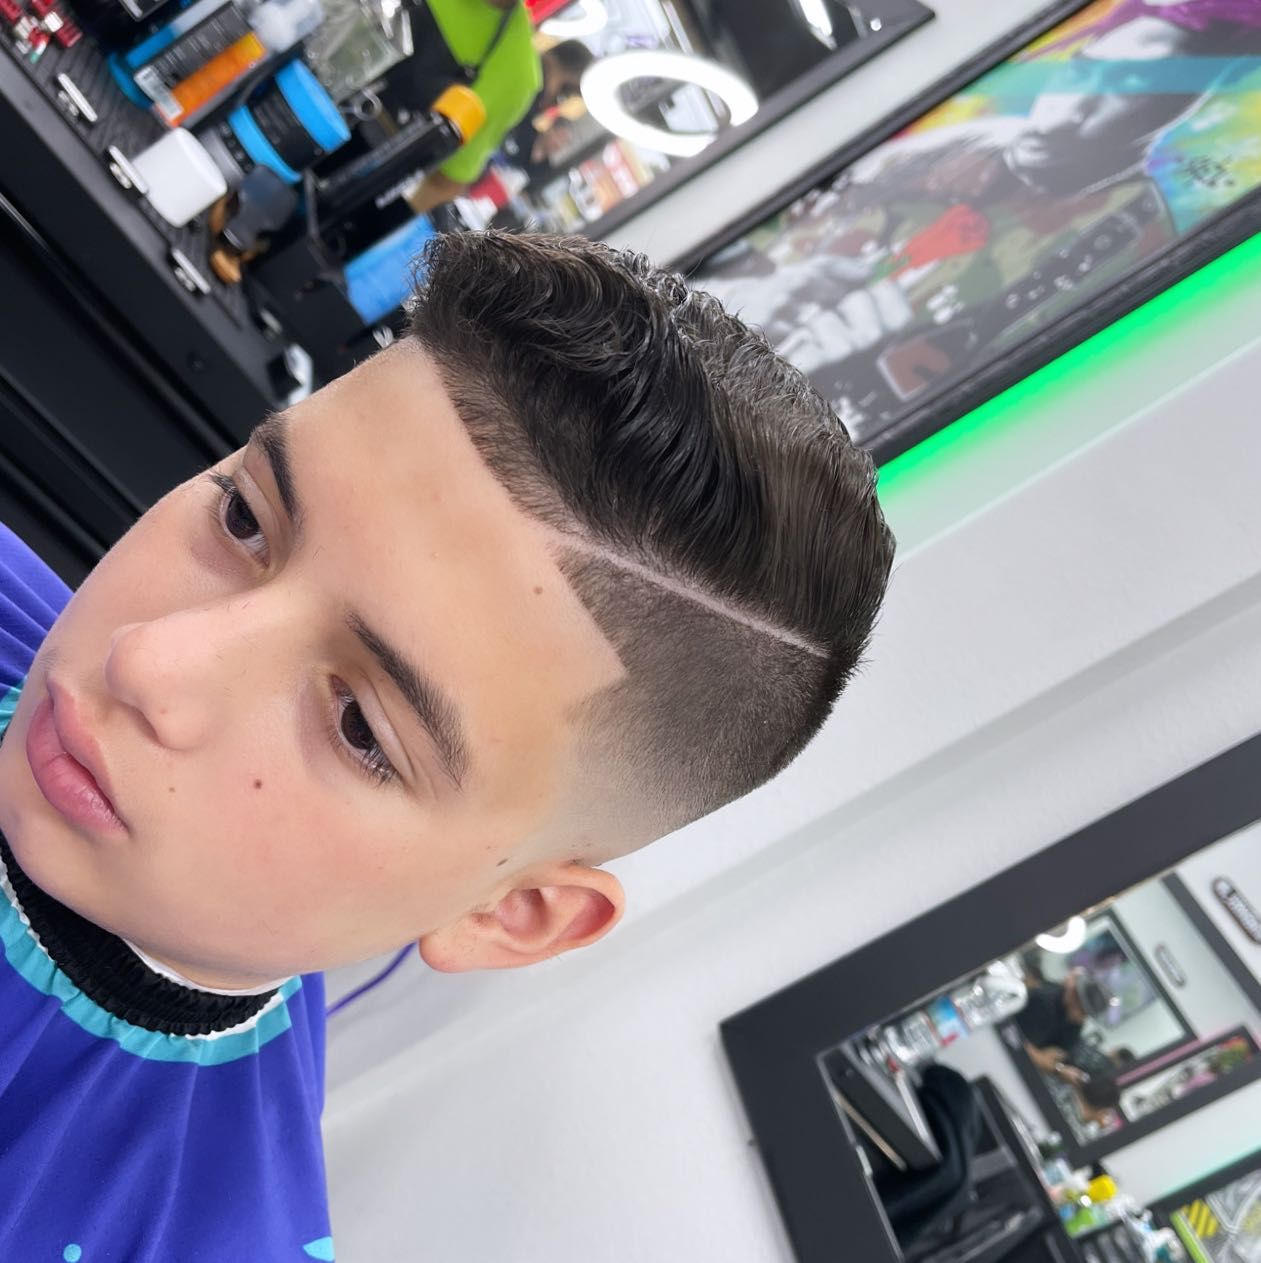 Kid’s haircuts /5-12yrs old💈 portfolio